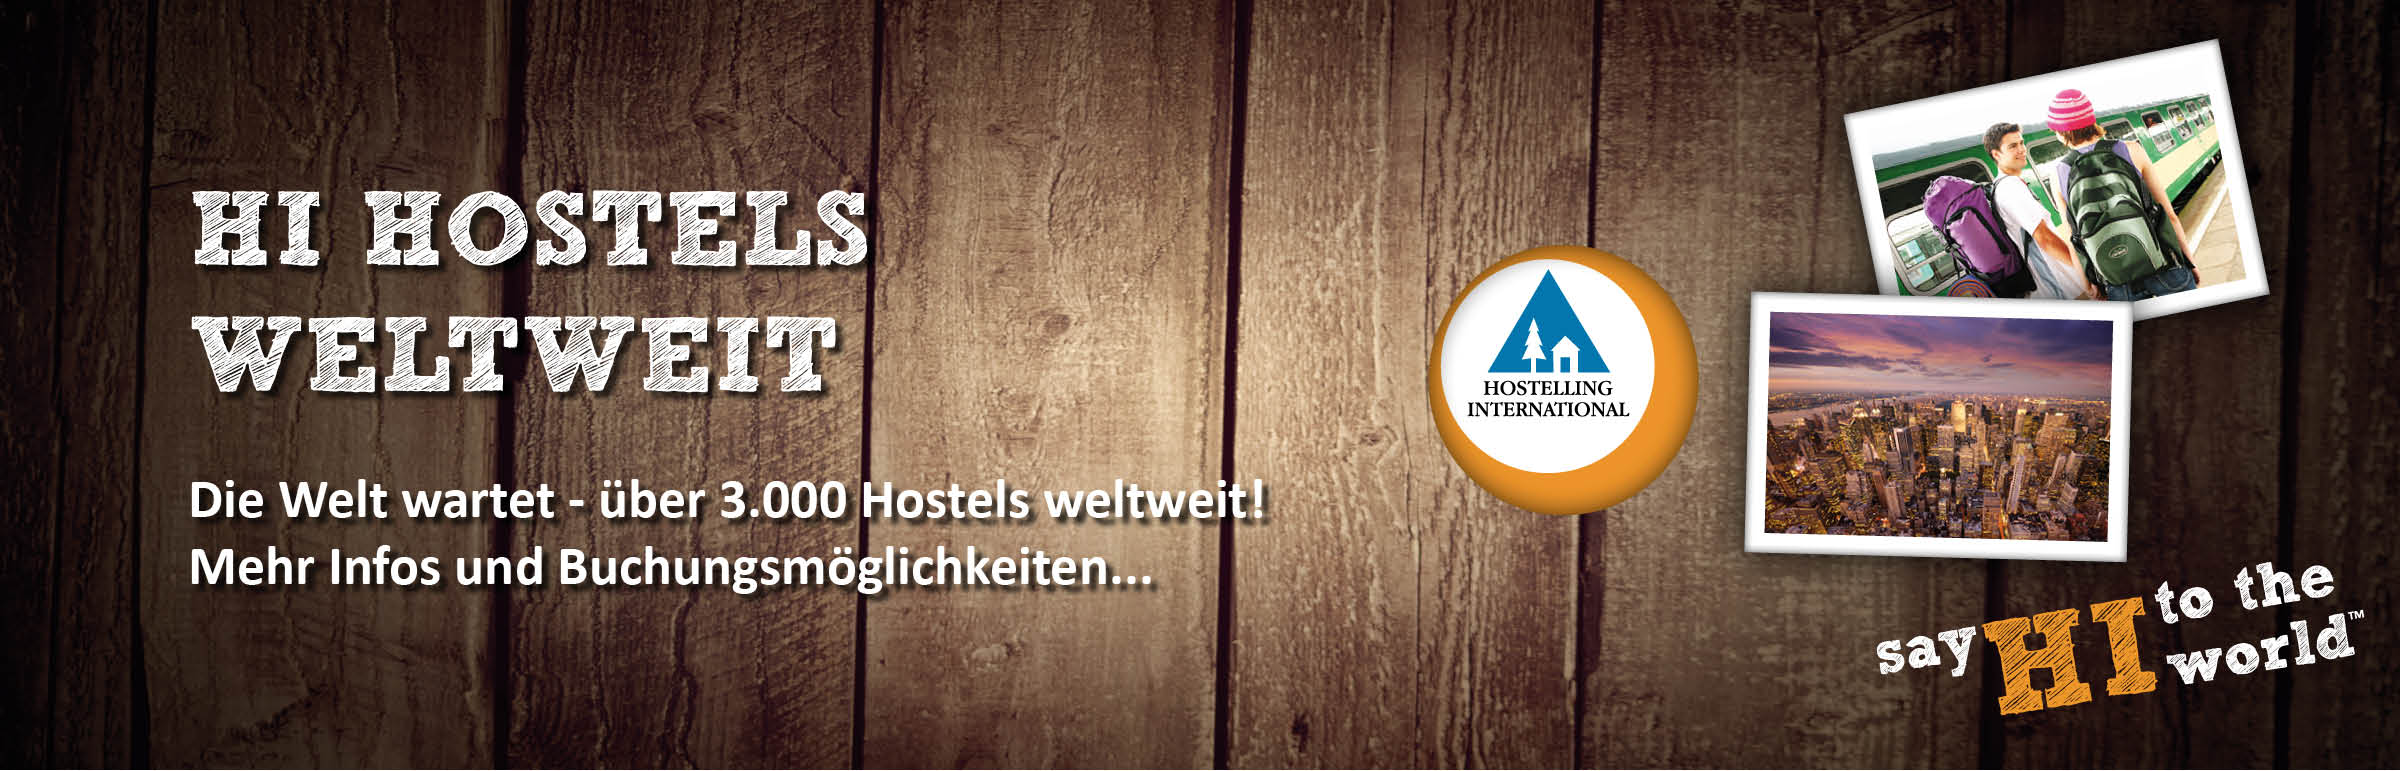 Hostelling International: Hostels weltweit